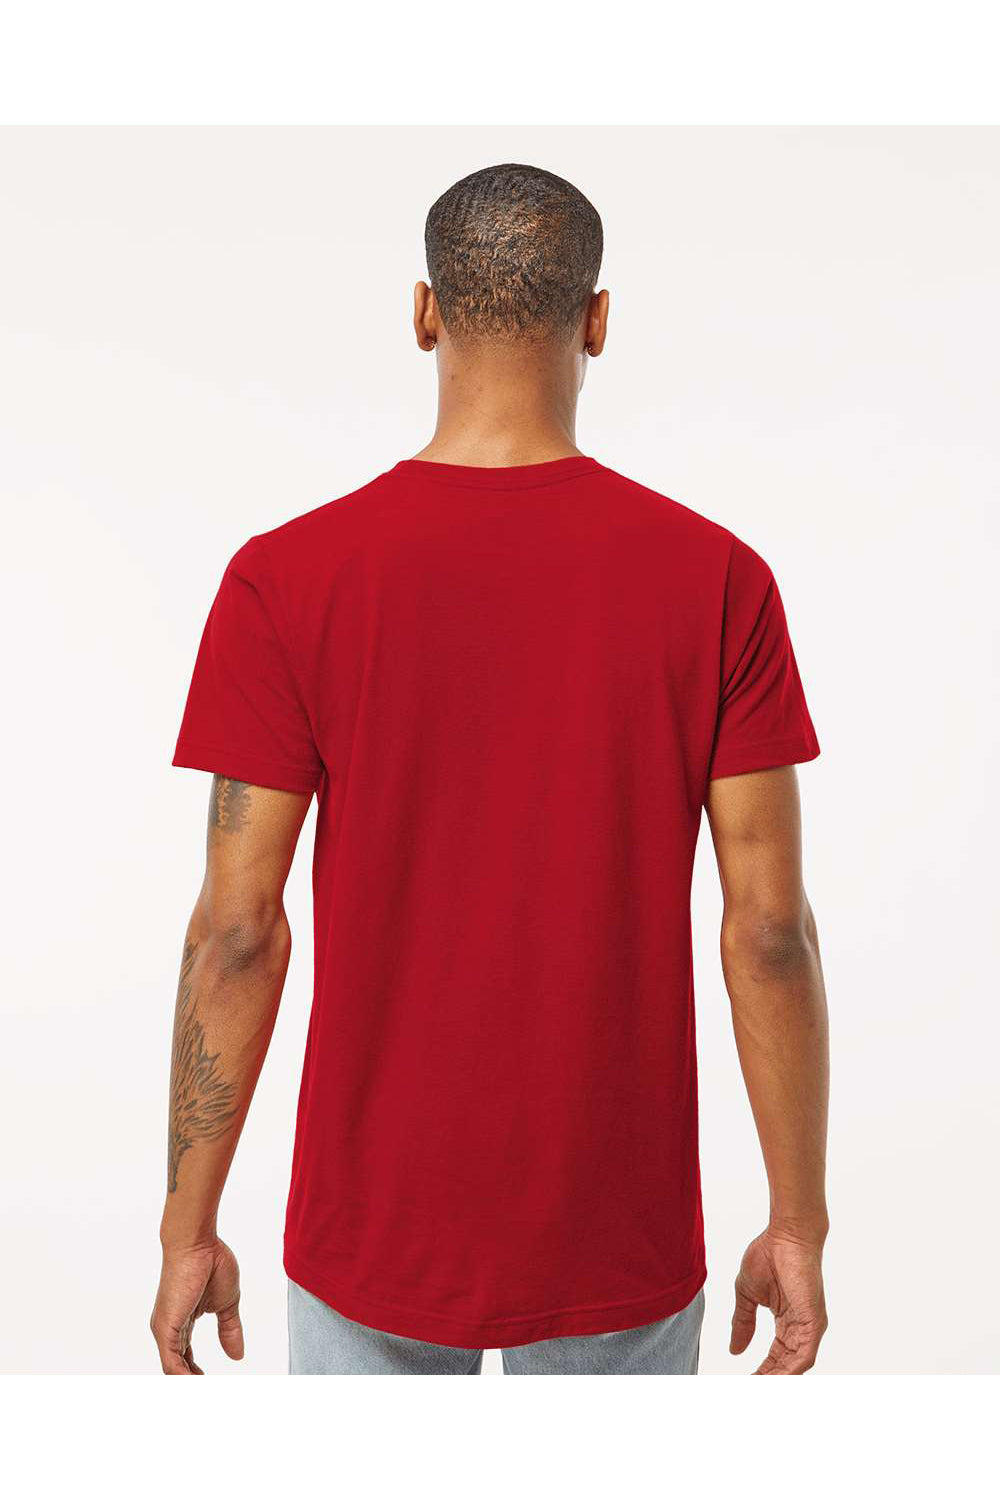 Tultex 202 Mens Fine Jersey Short Sleeve Crewneck T-Shirt Cardinal Red Model Back